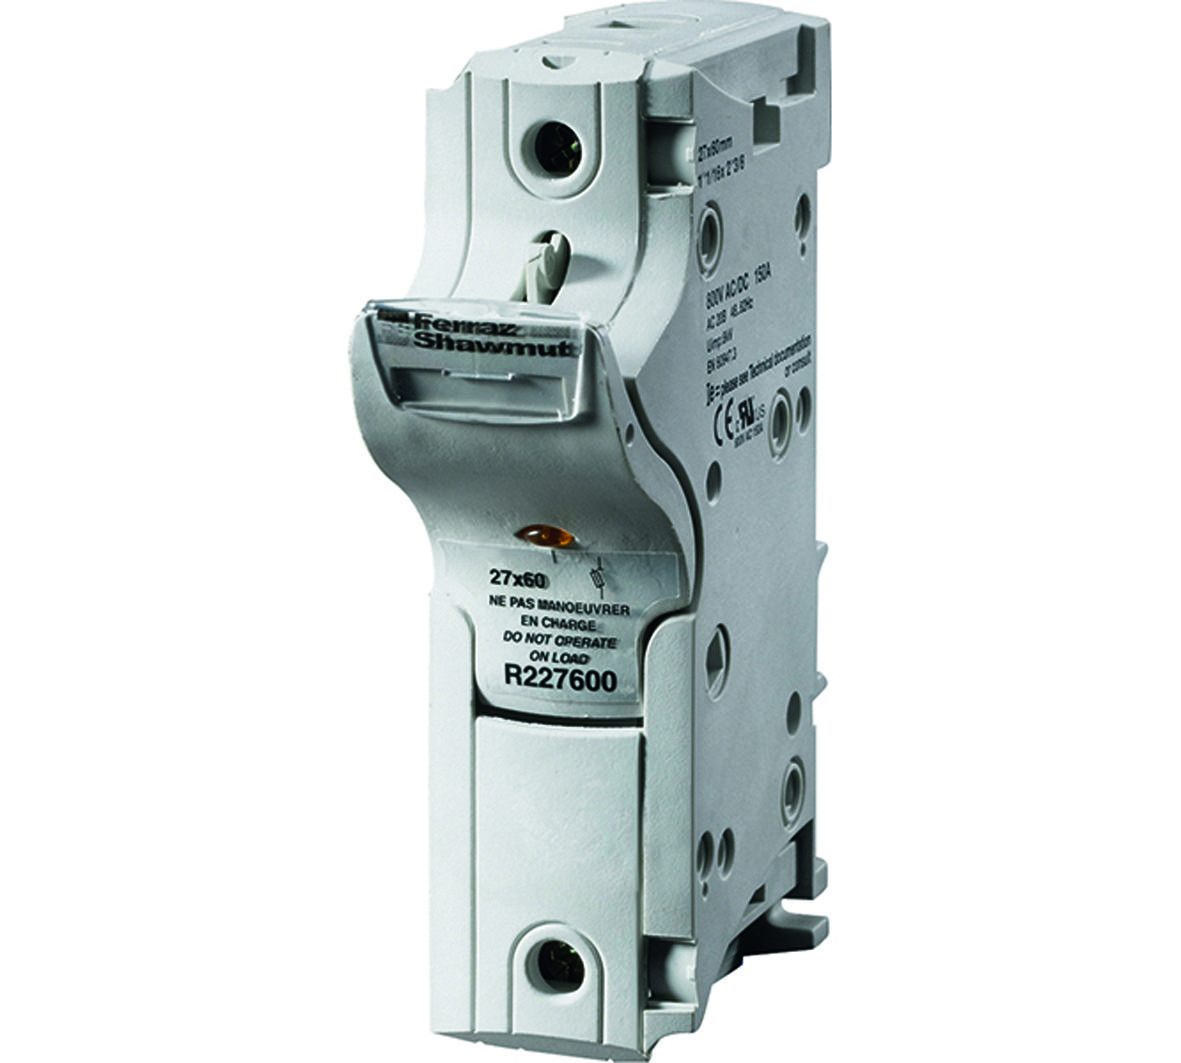 R227600 - modular fuse holder, UL, 1P, 27x60, DIN rail mounting, IP20, MS and indicator